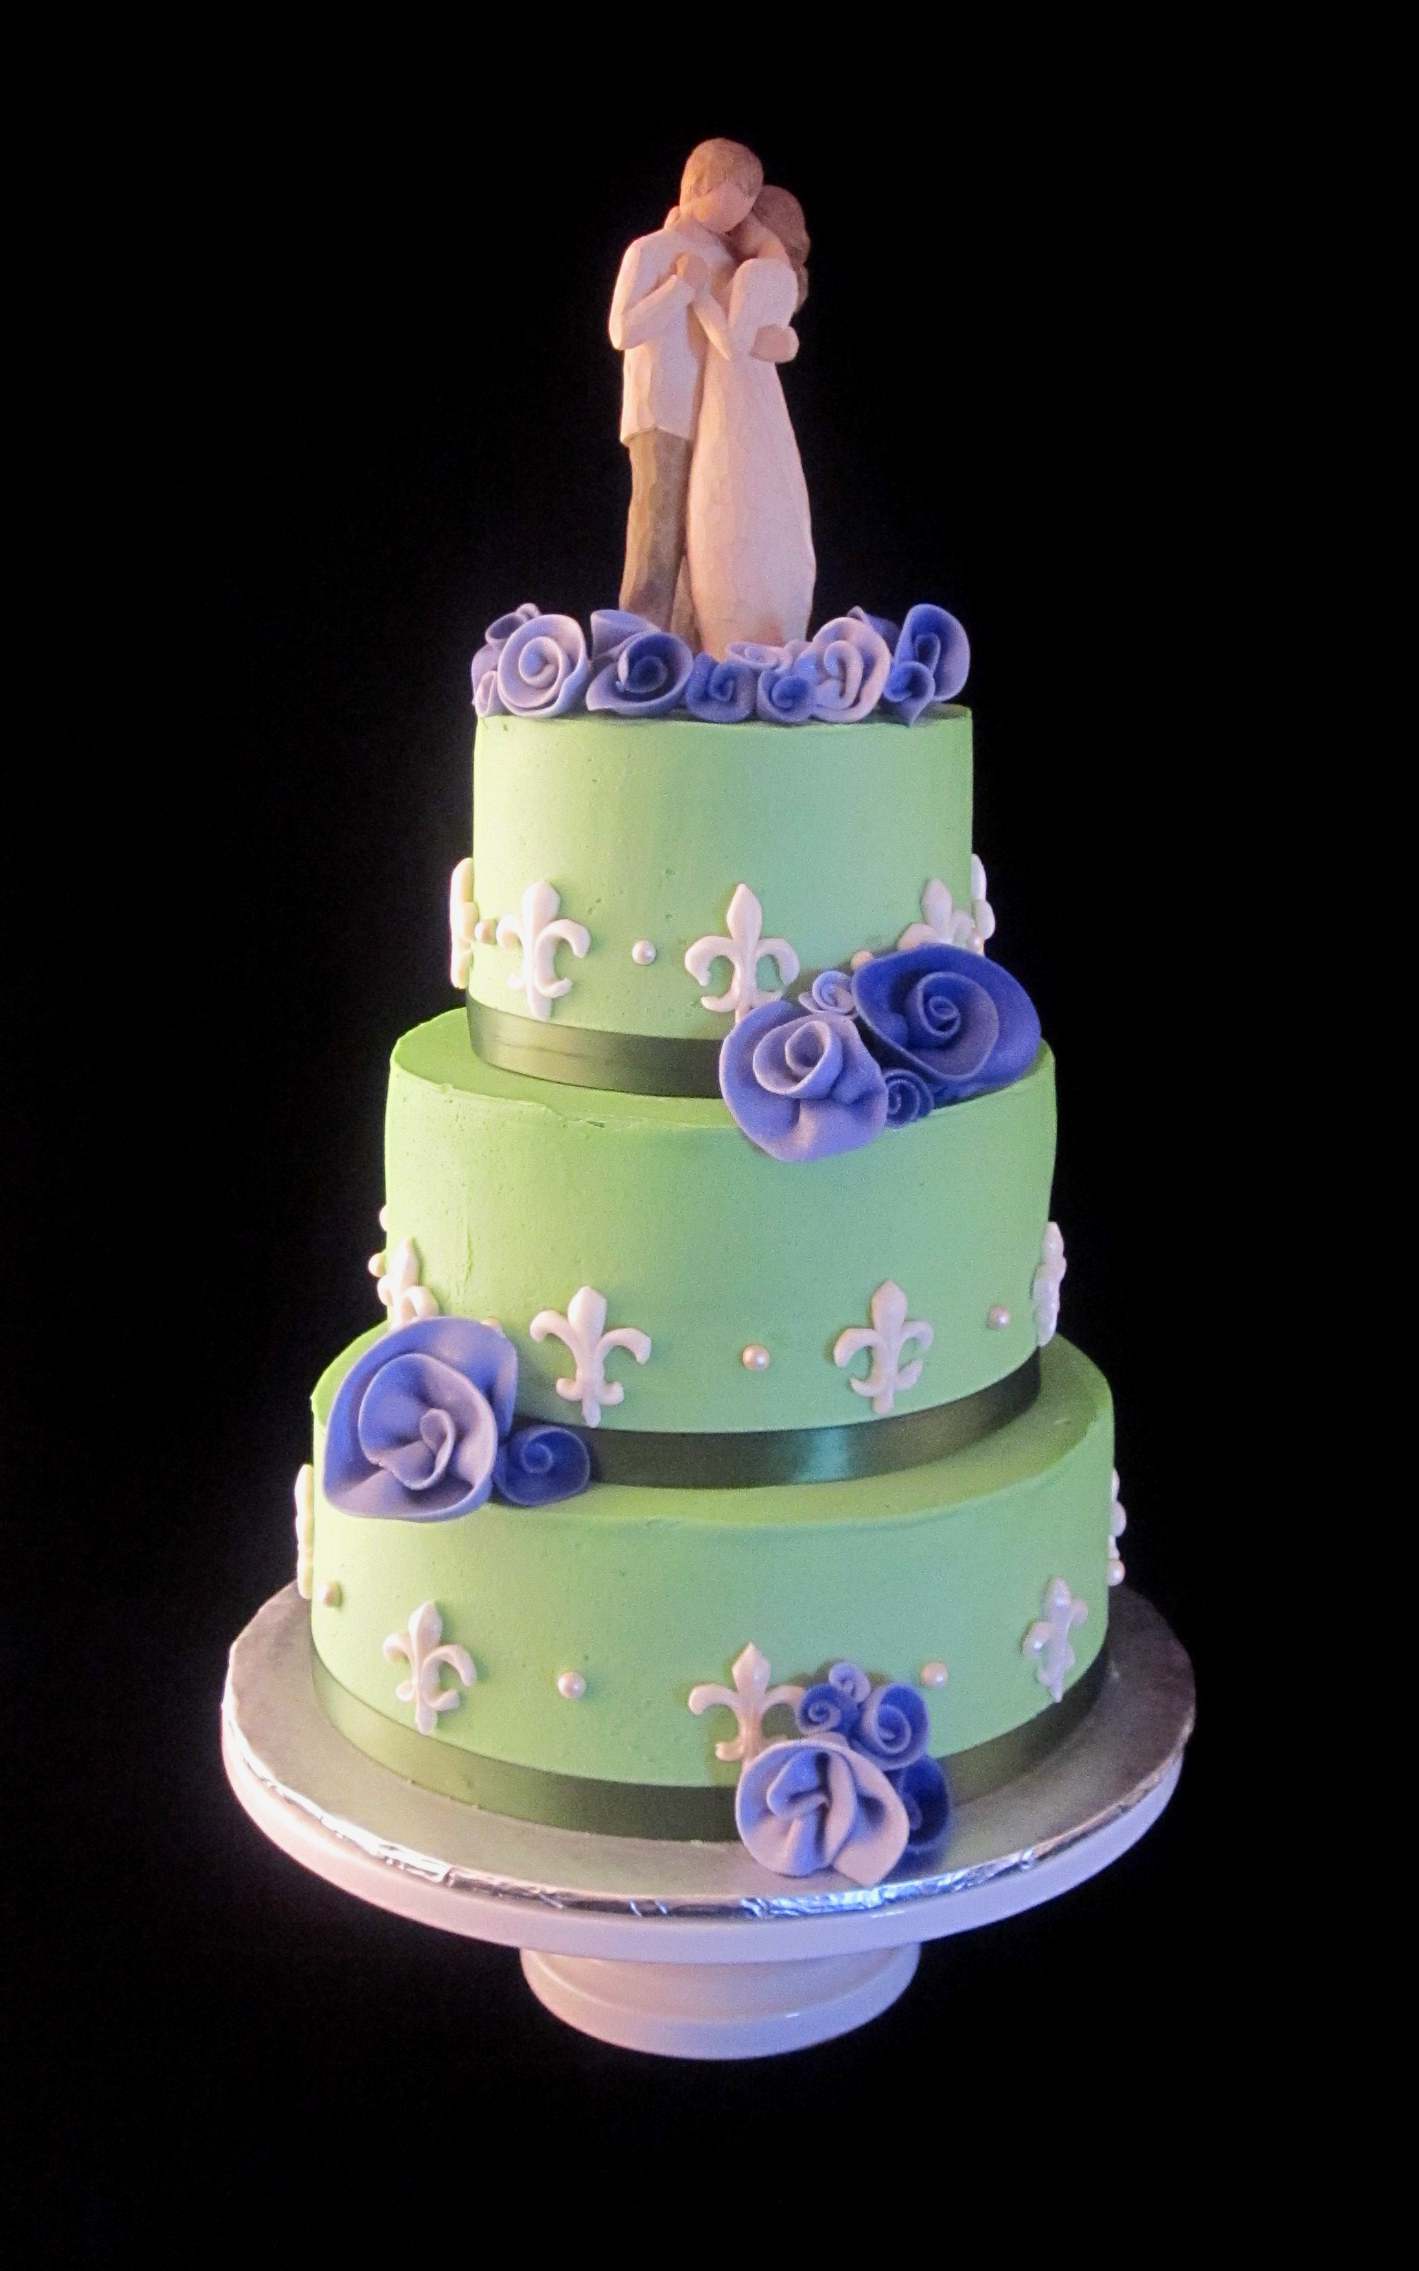 ... cake springfield summer cake tier twisted versailles wedding wedding